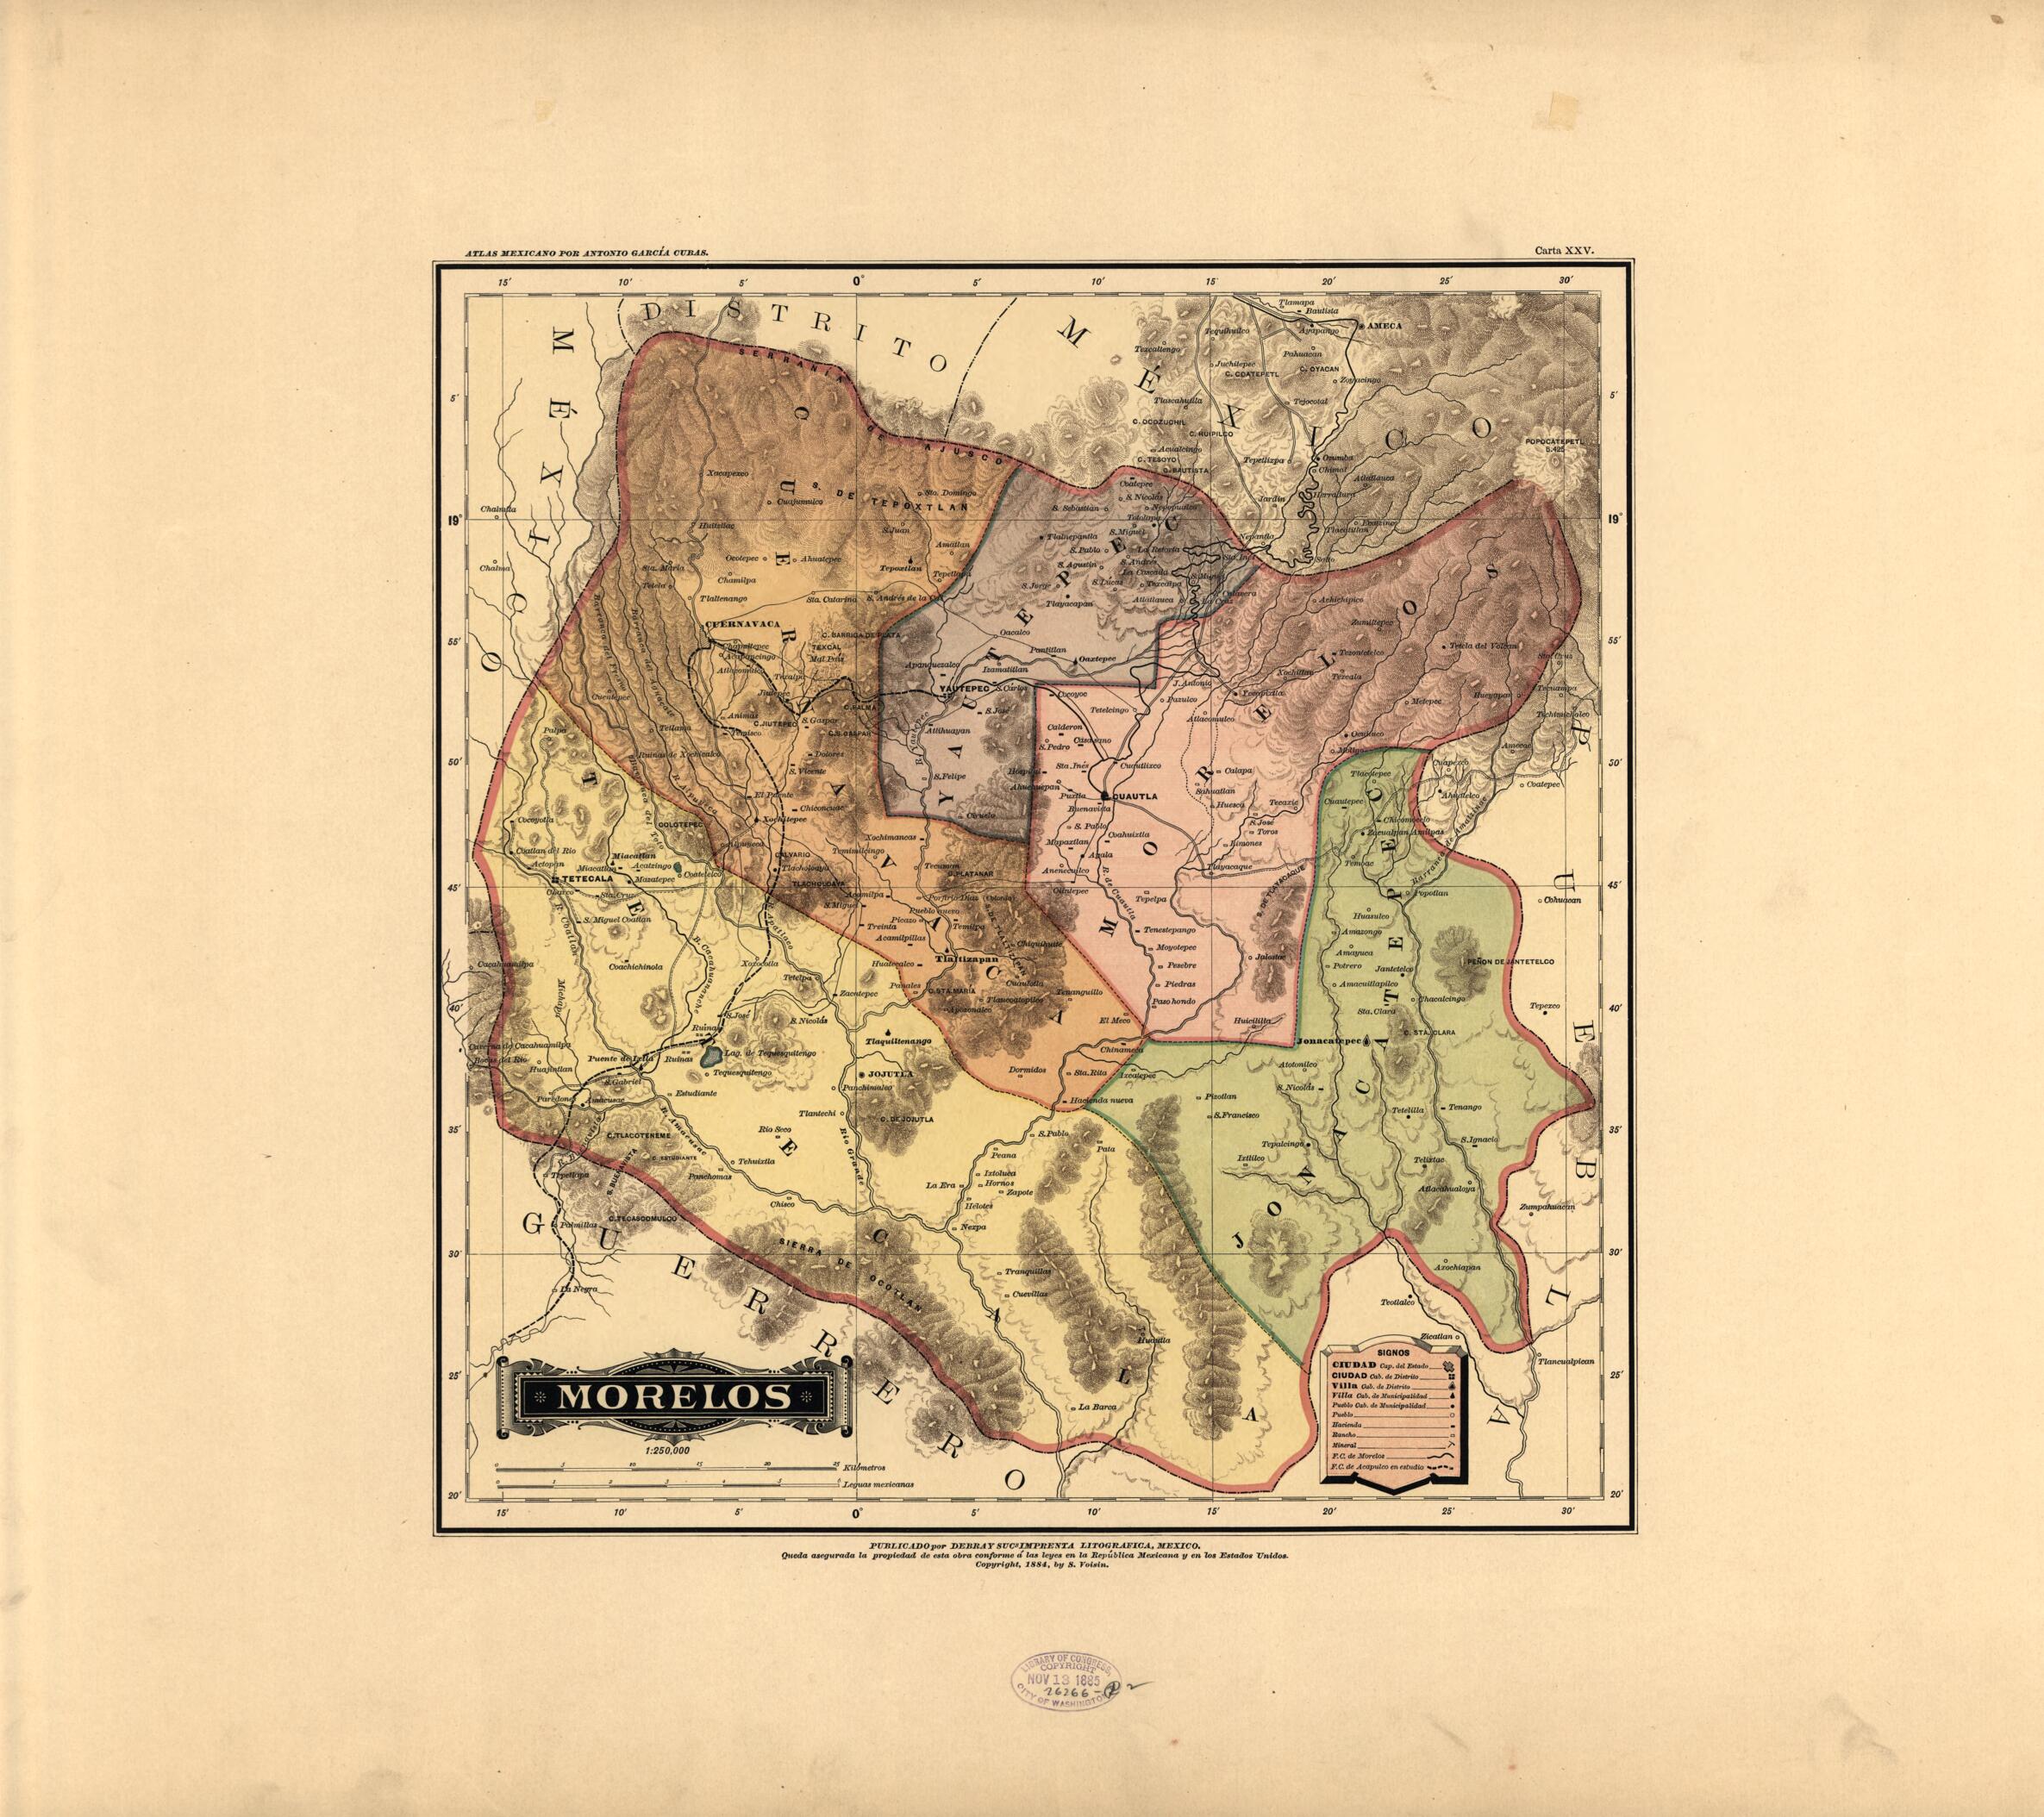 This old map of Morelos from Atlas Mexicano. from 1884 was created by Antonio García Cubas in 1884